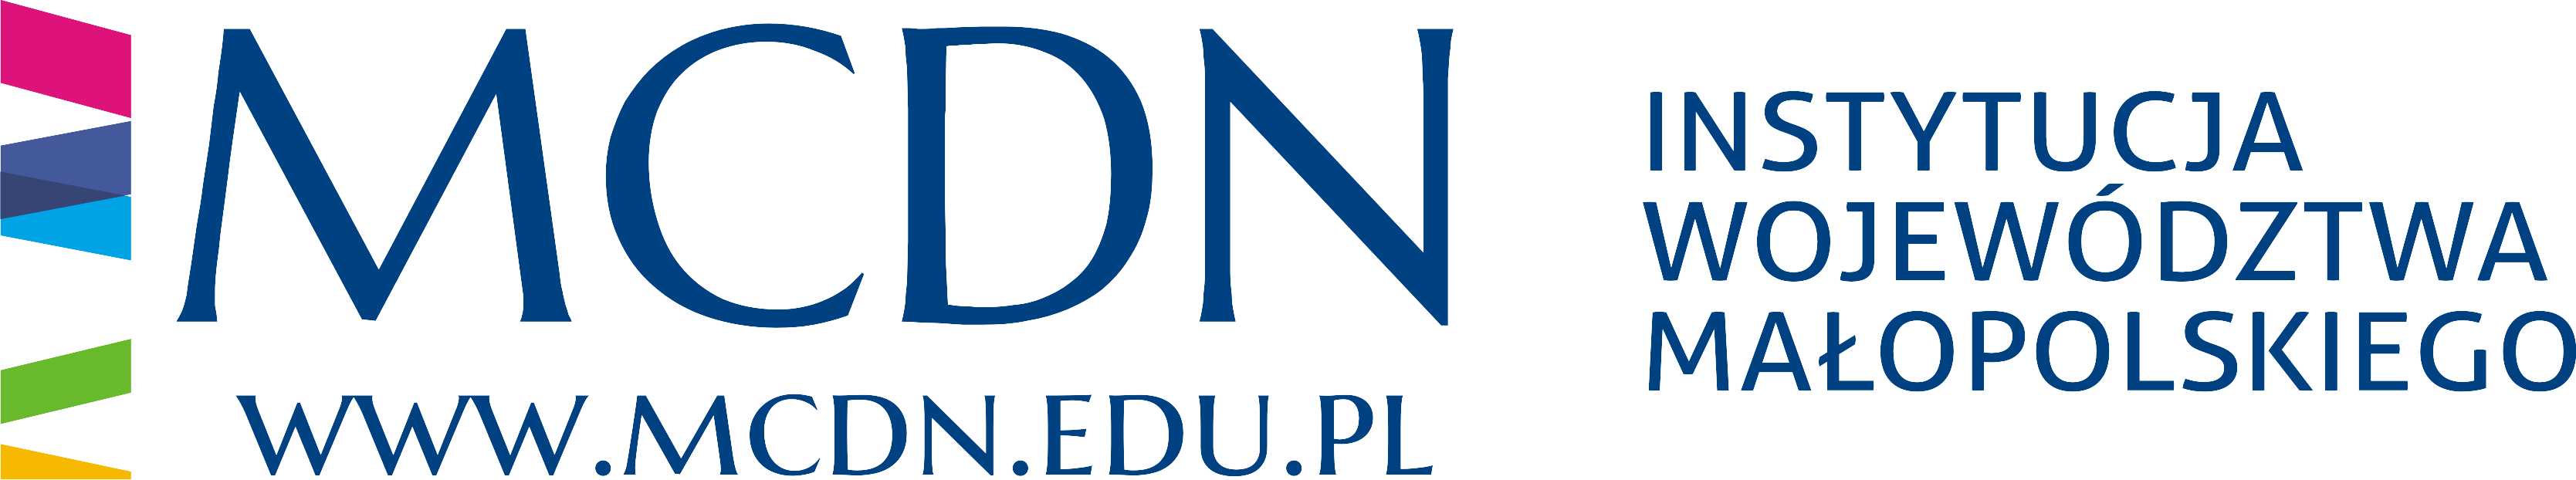 Logotyp MCDN